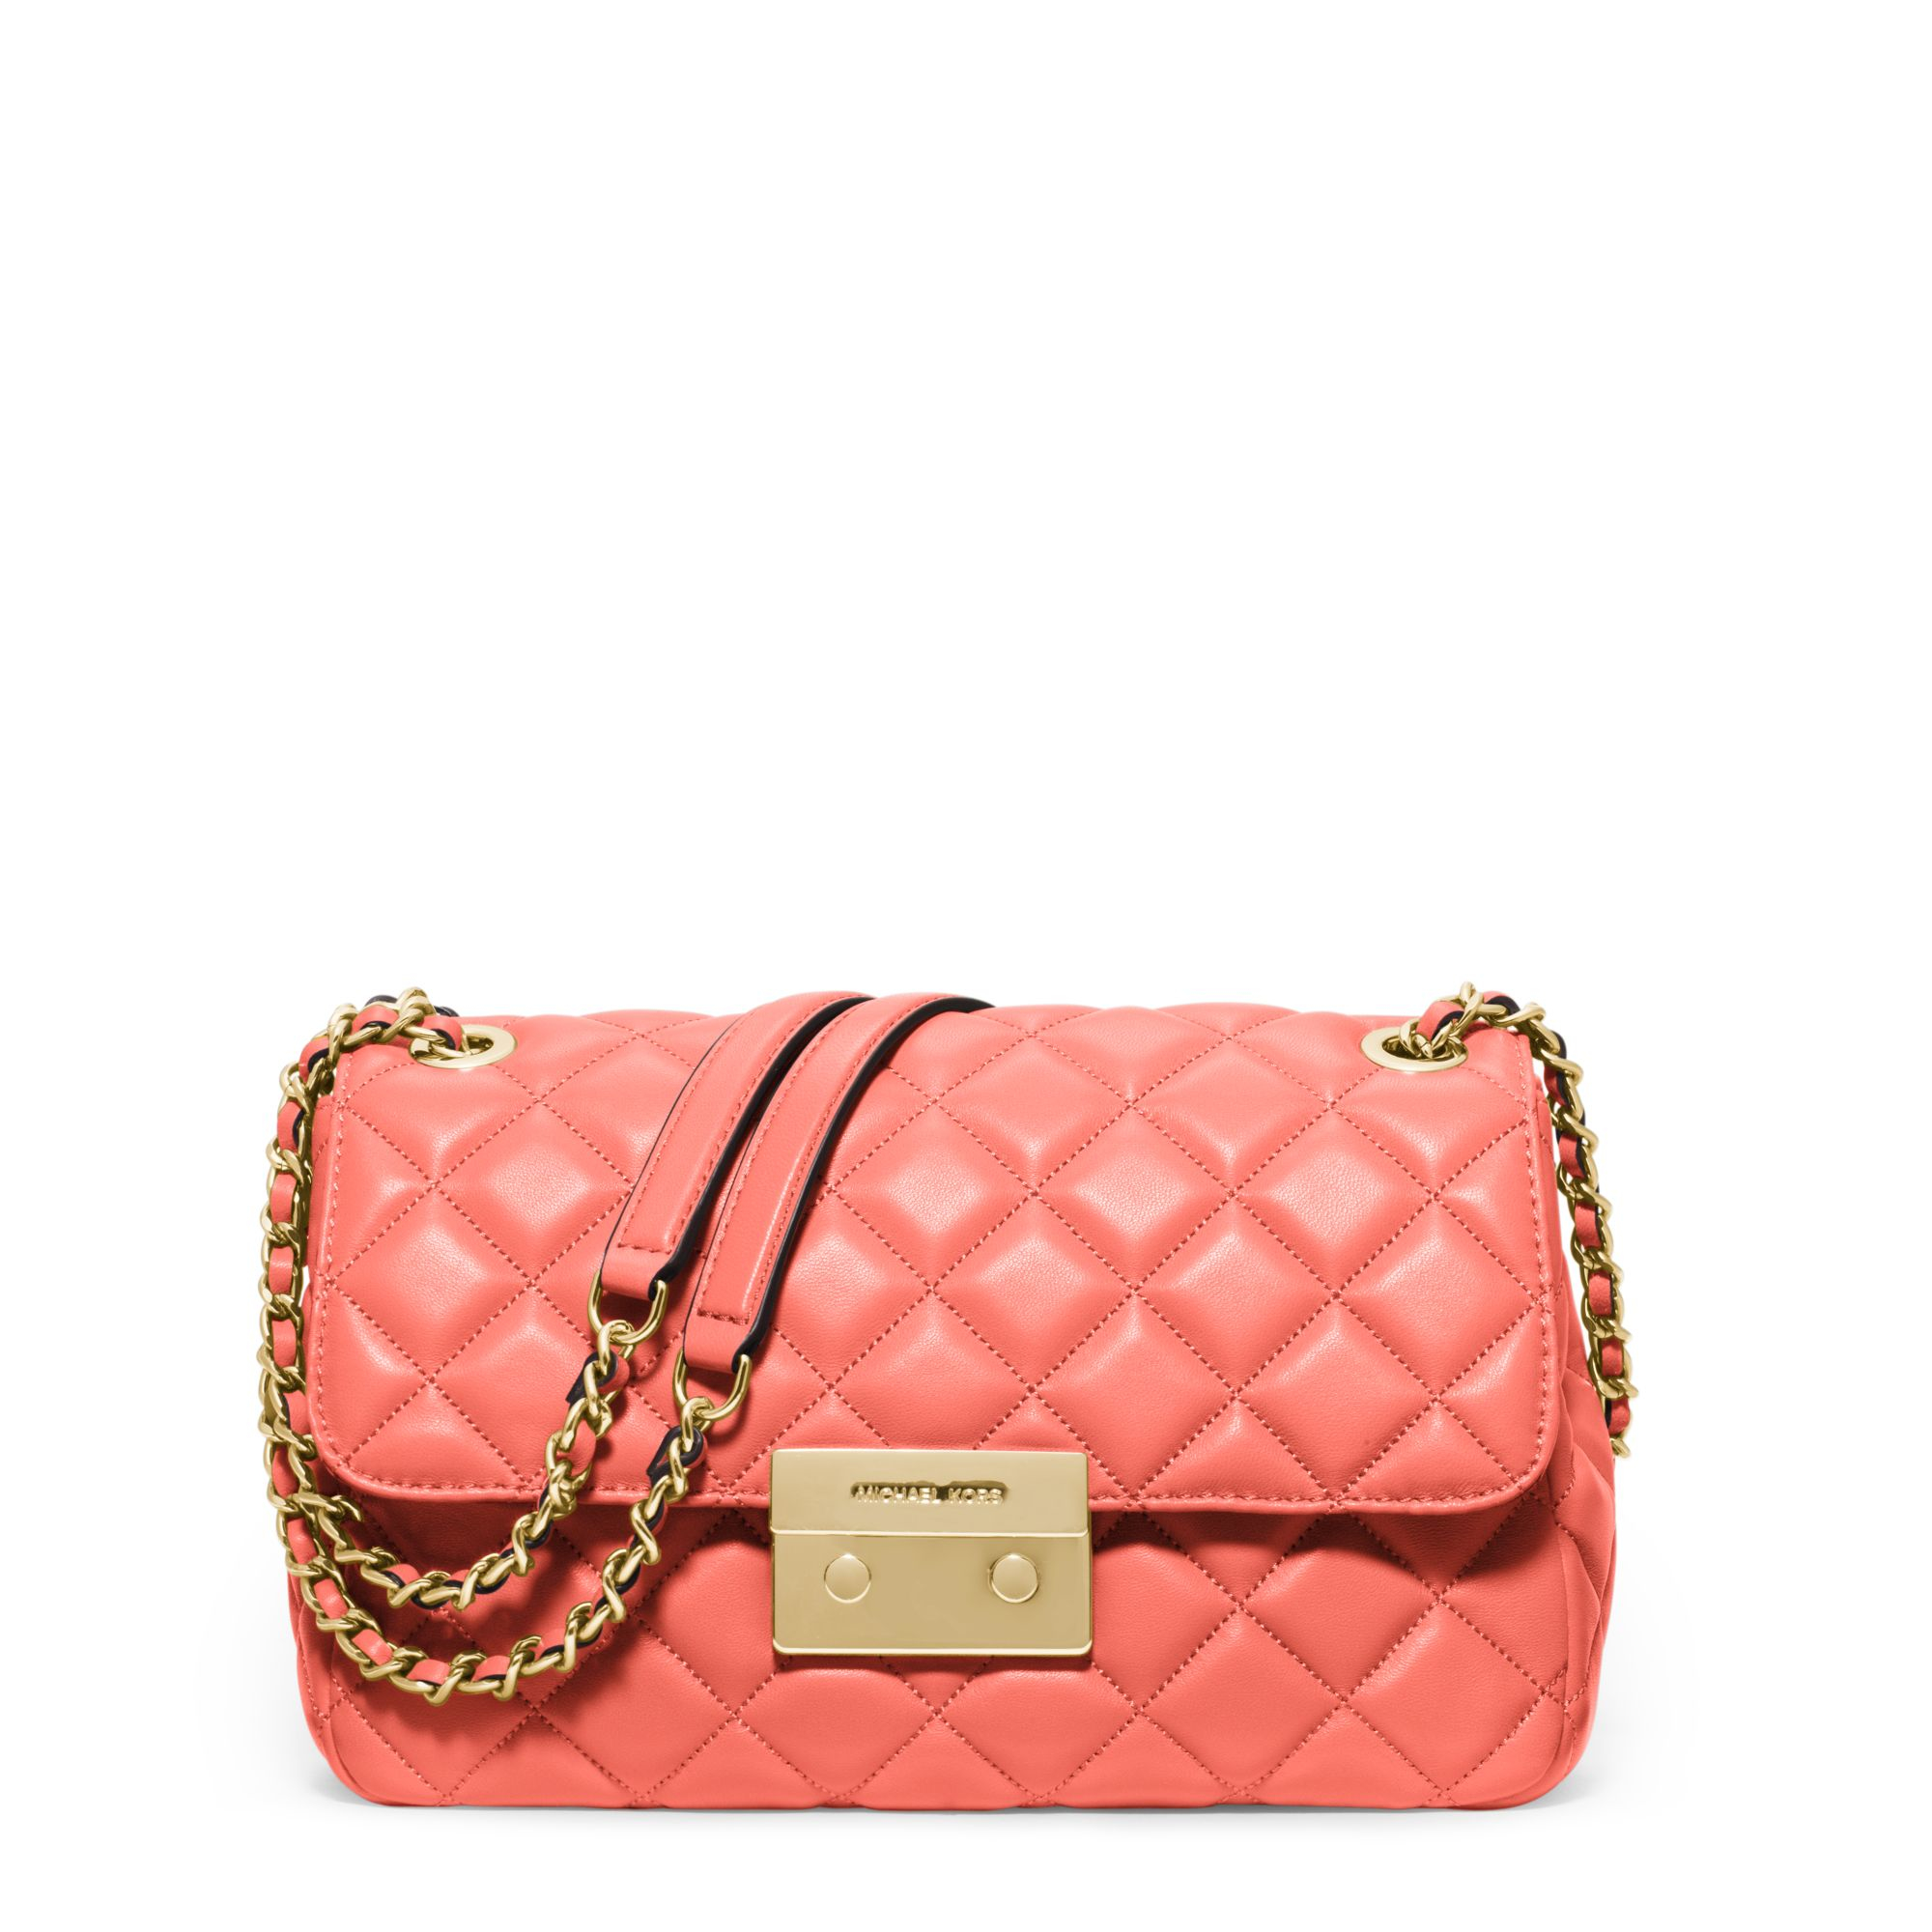 Lyst - Michael Kors Sloan Large Quilted-leather Shoulder Bag in Pink